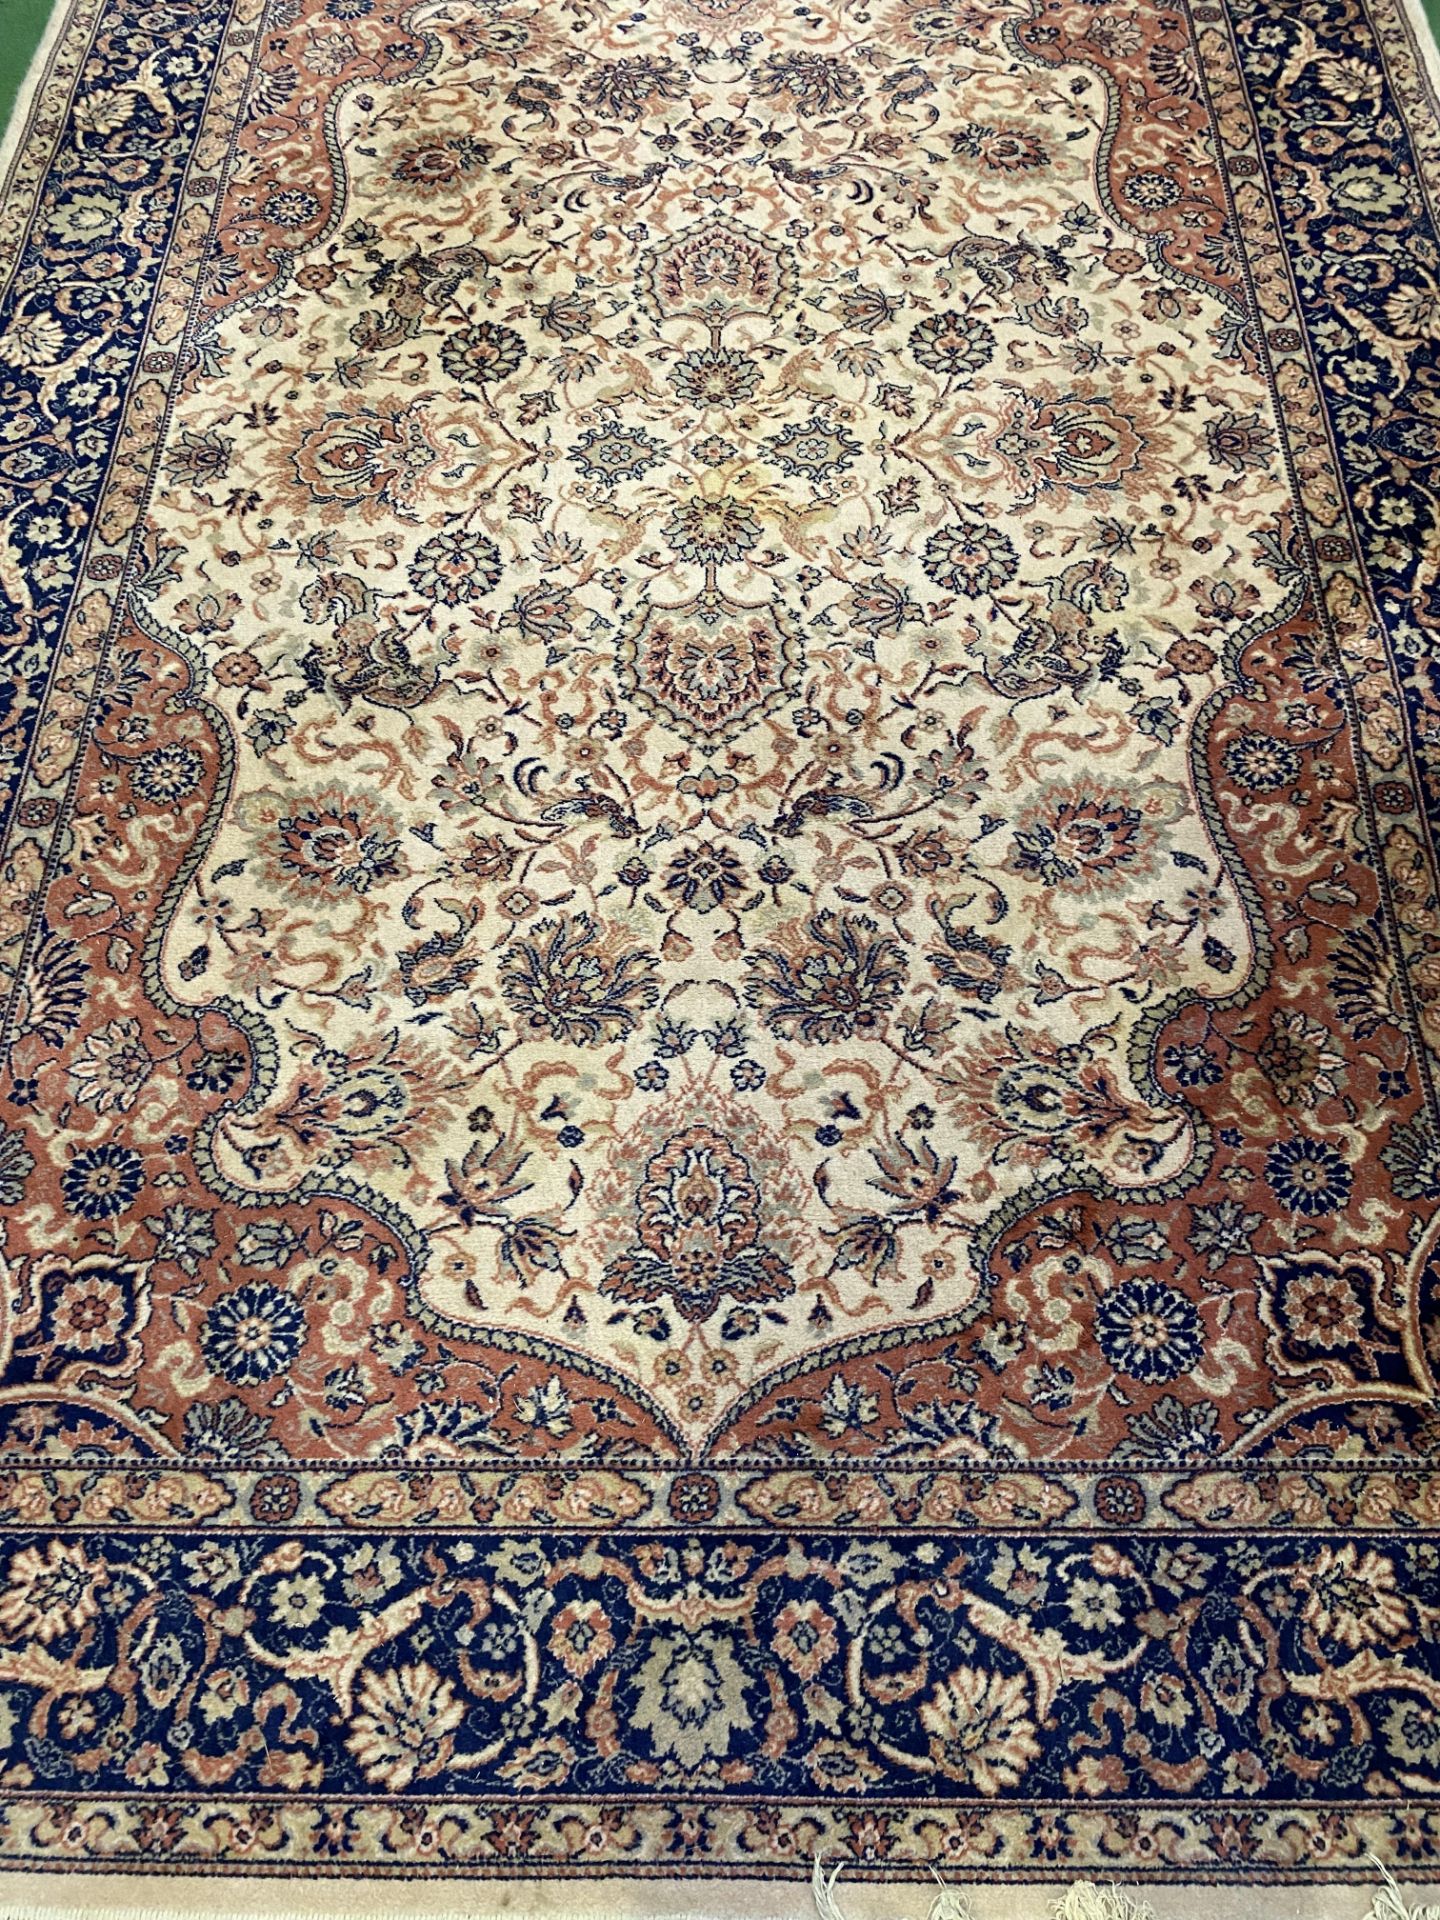 Cream ground wool carpet - Image 2 of 5